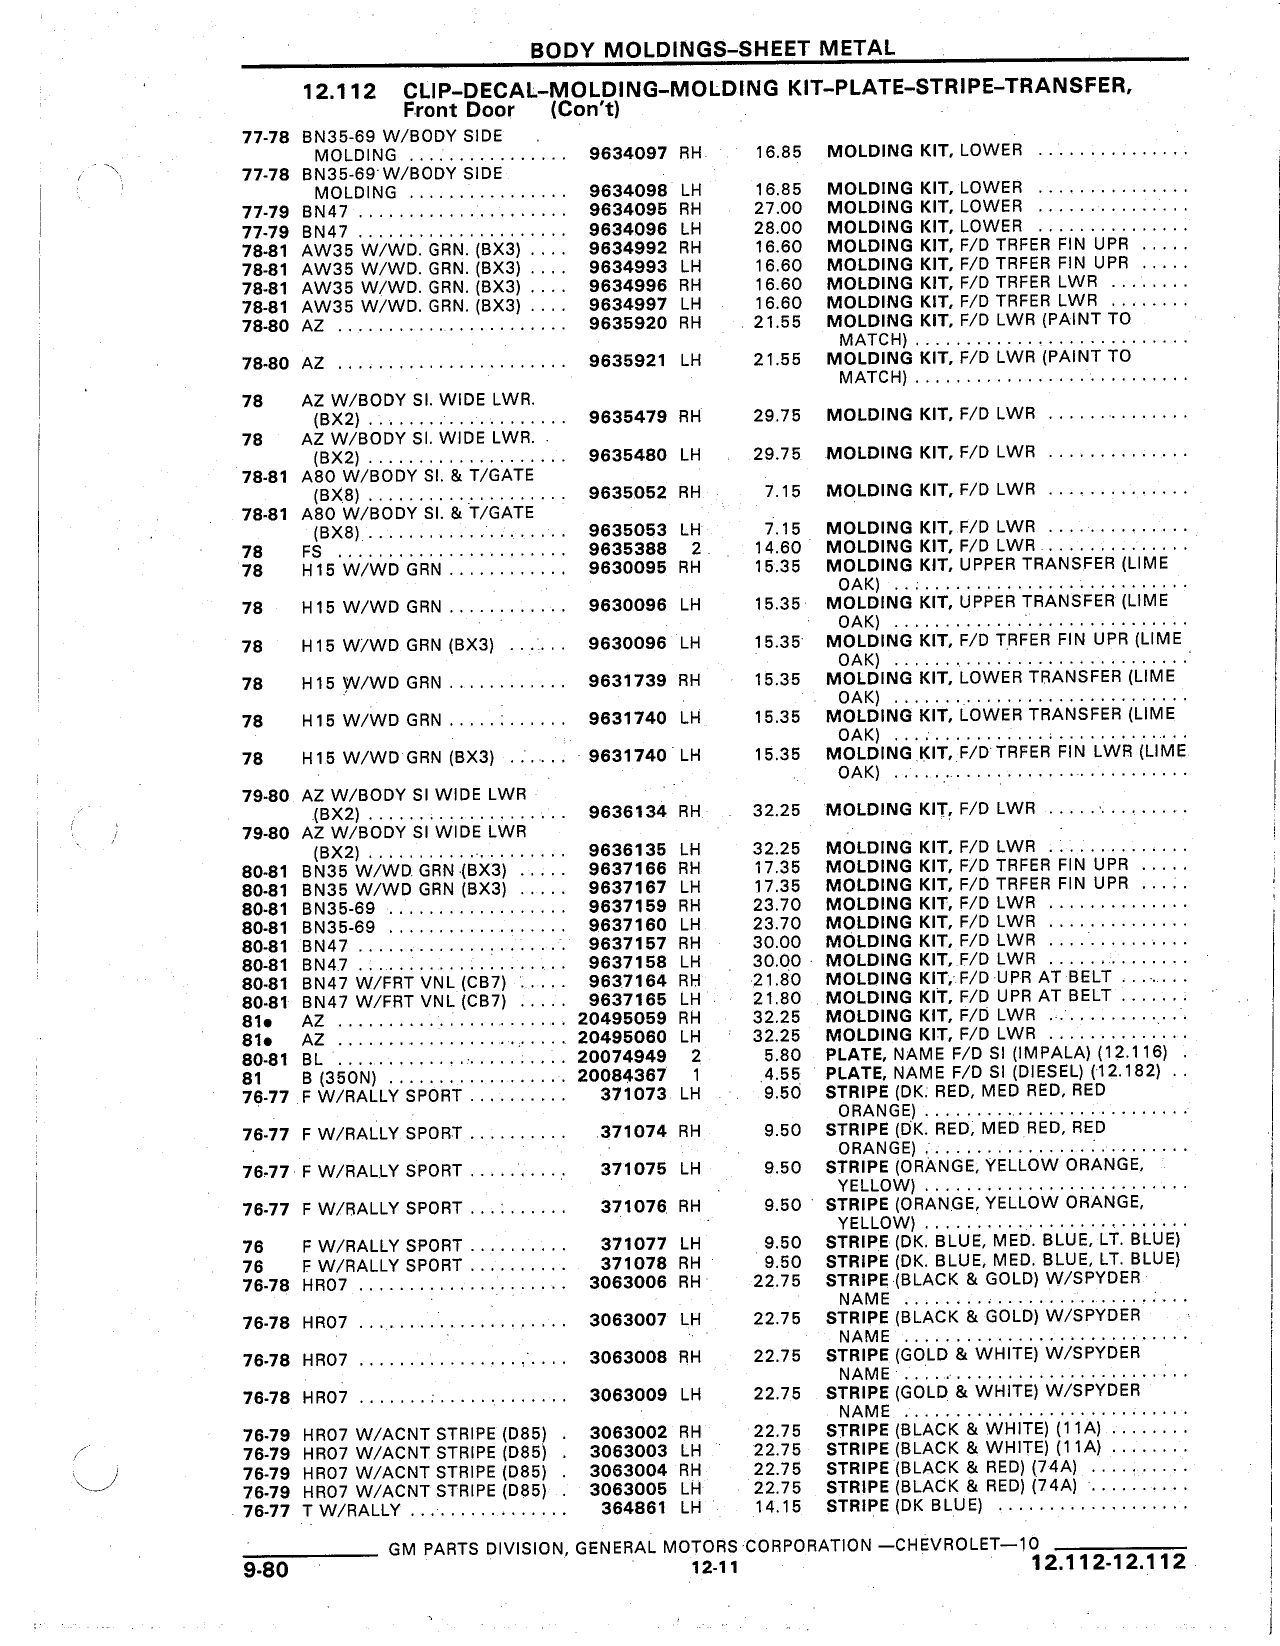 Parts Catalogue 10 September 1980